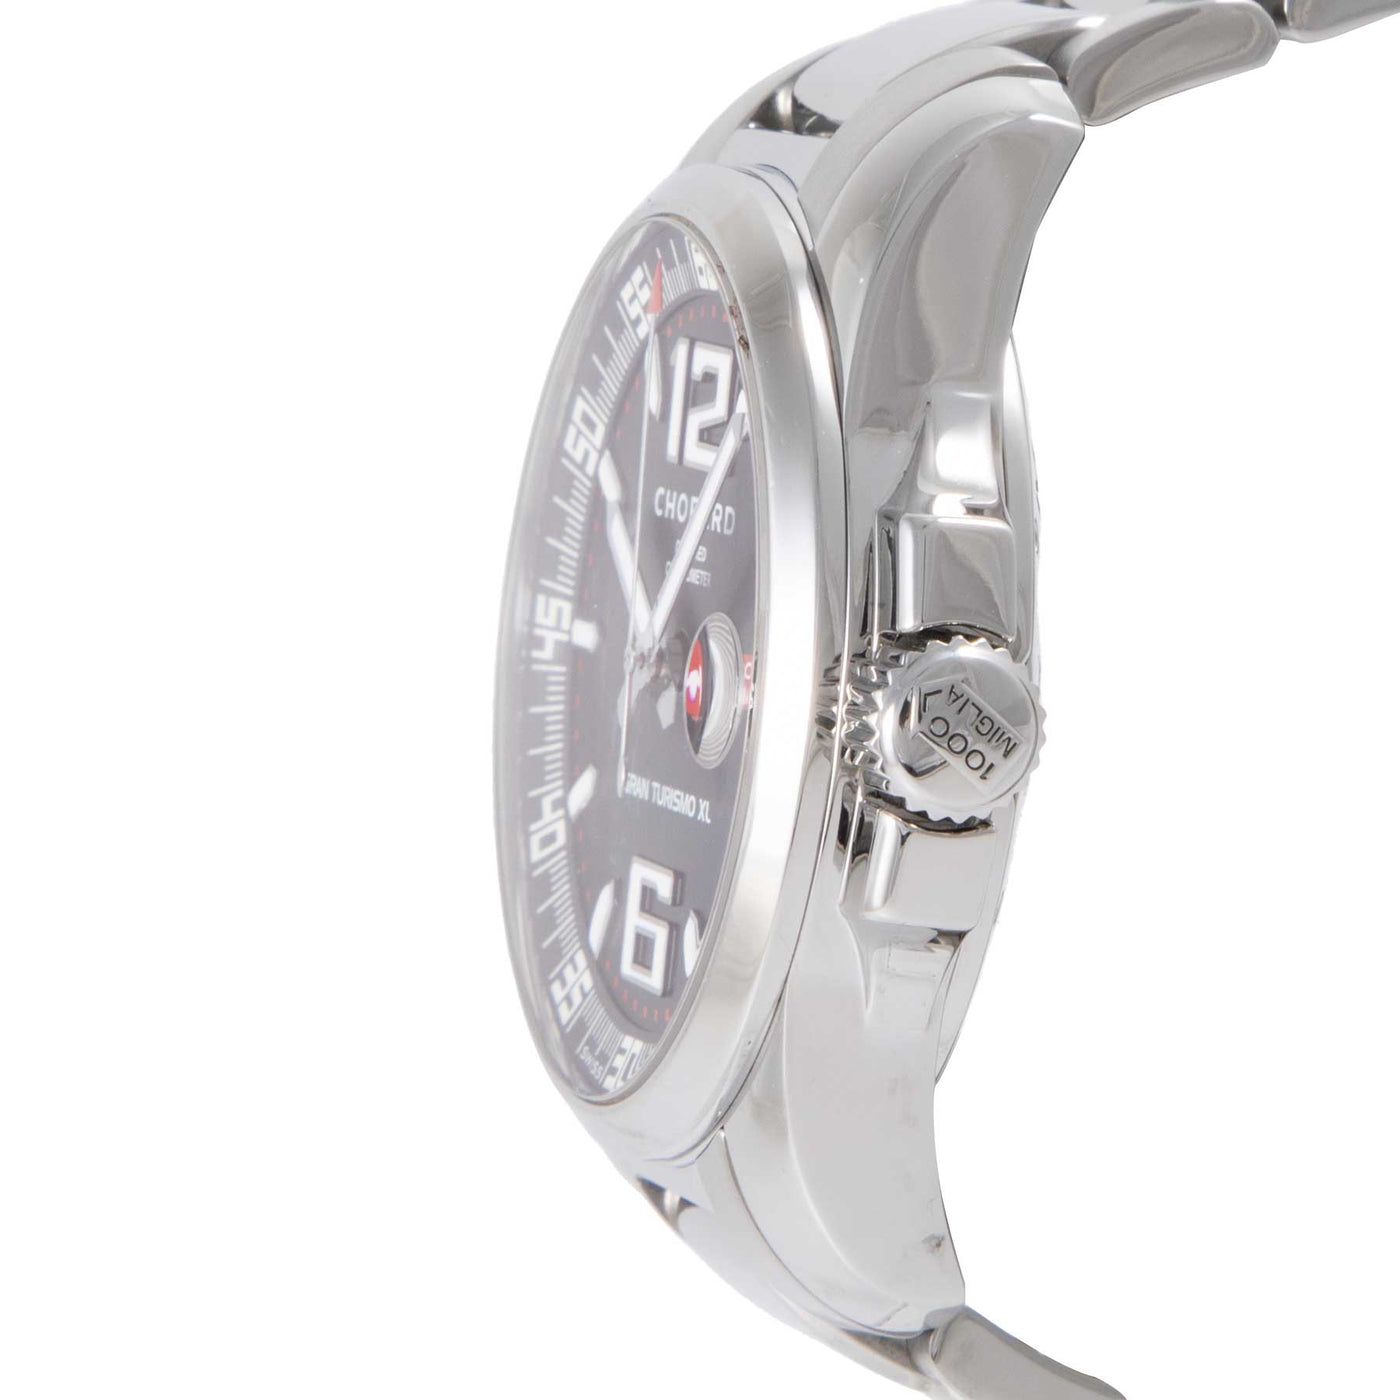 Chopard Mille Miglia Gran Turismo XL158997-3001 | Timepiece360